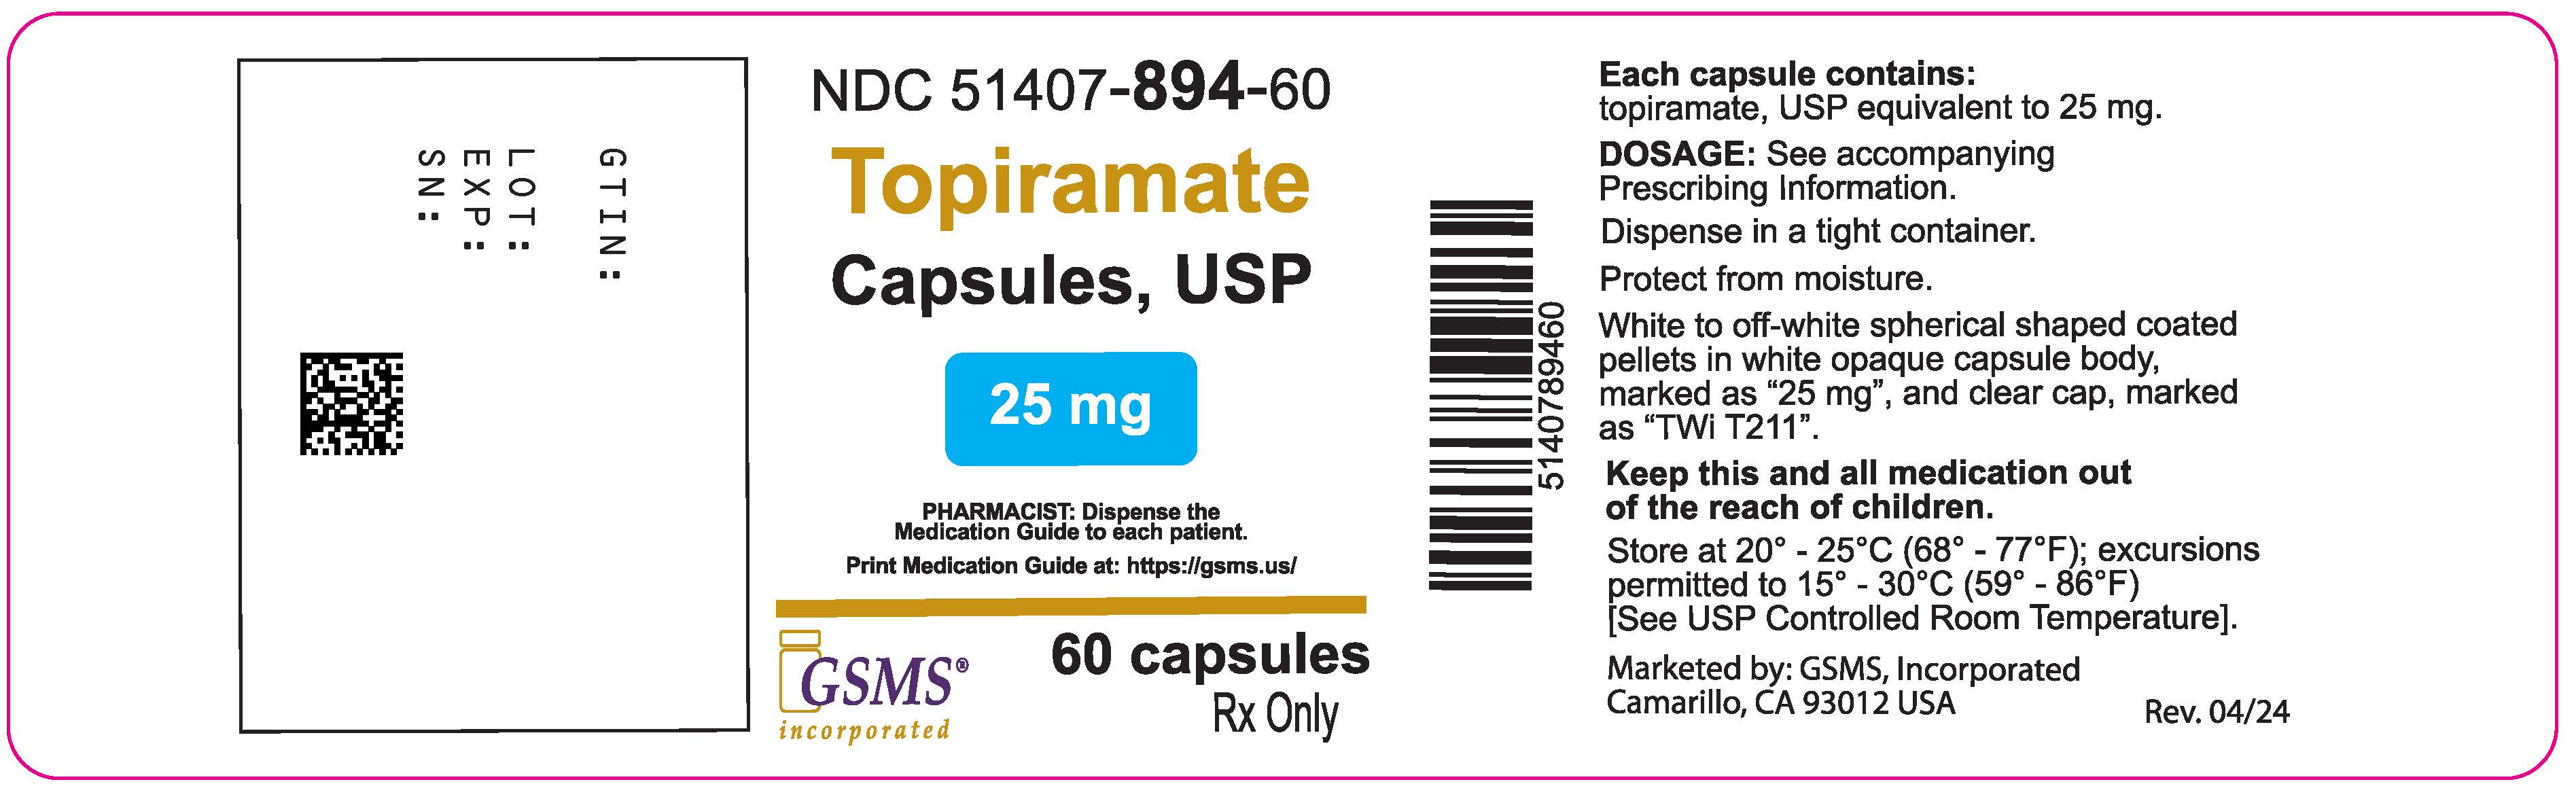 51407-894-60OL - Topiramate 25 mg - Rev. 0424.jpg